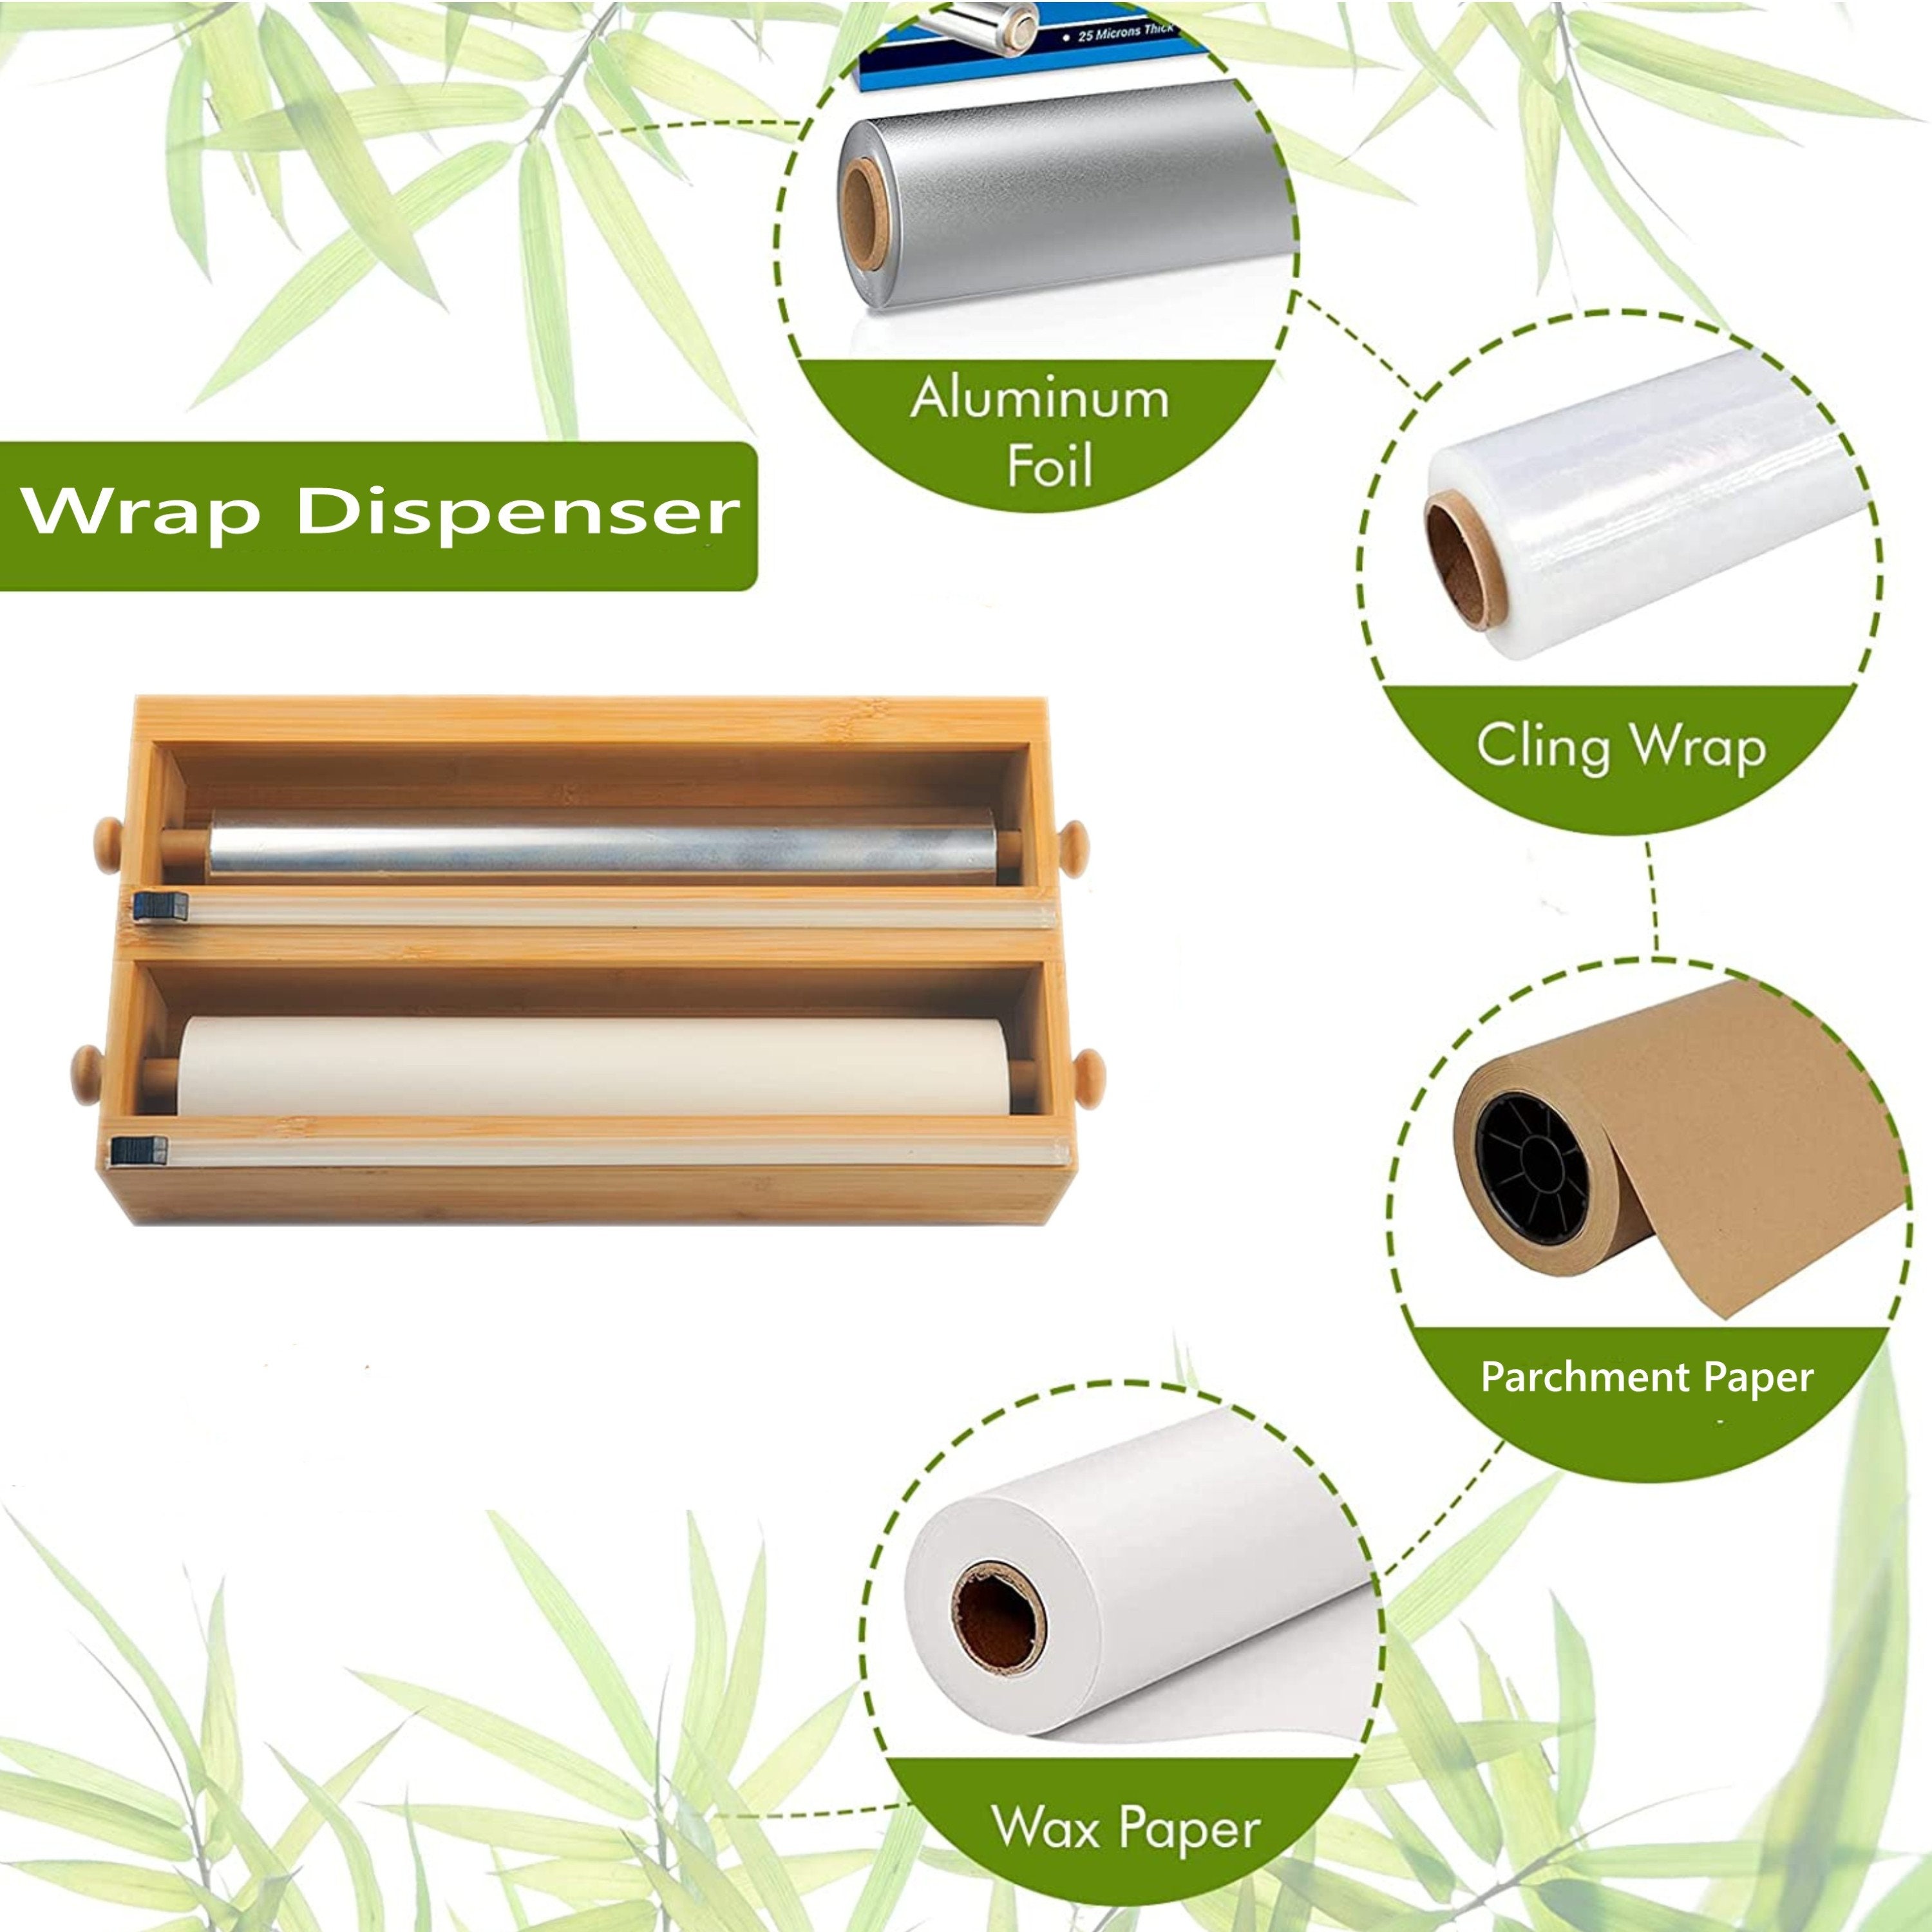 Bamboo Foil and Wrap Dispenser With Slide Cutter Sliding Divider